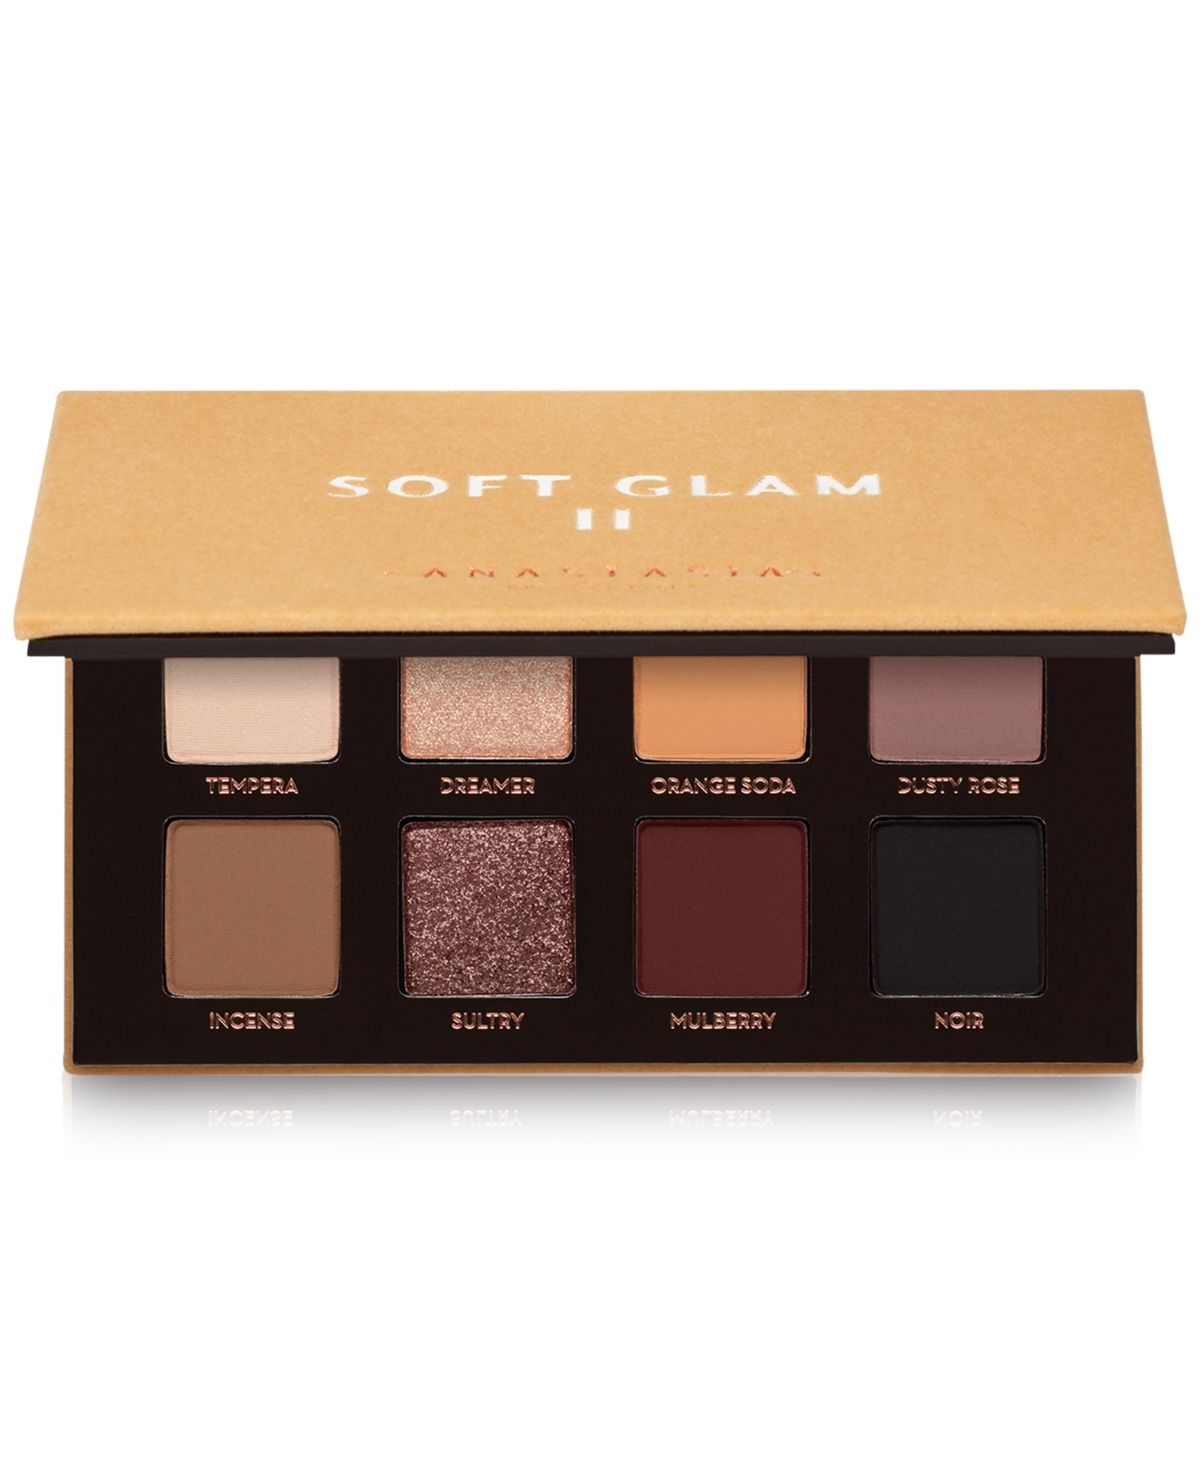 Anastasia Beverly Hills Soft Glam Ii Mini Eyeshadow Palette | Macys (US)